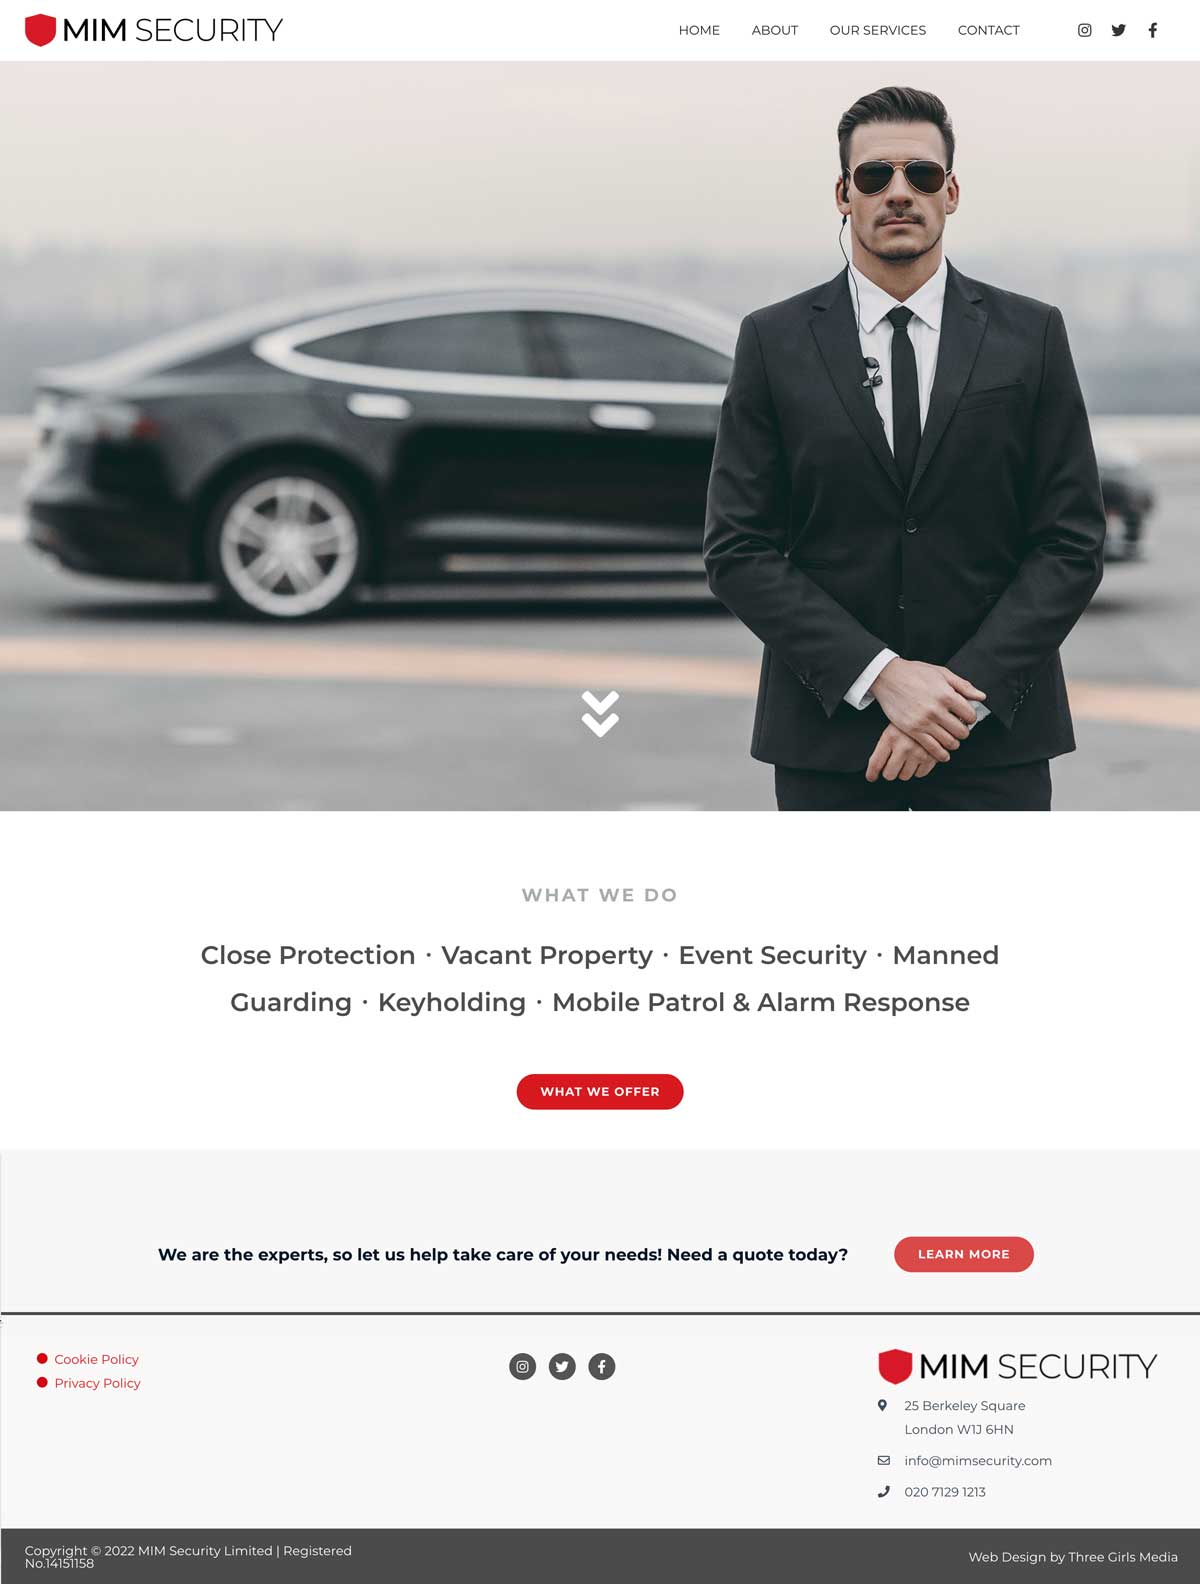 Brochure Website Design for MIM Security